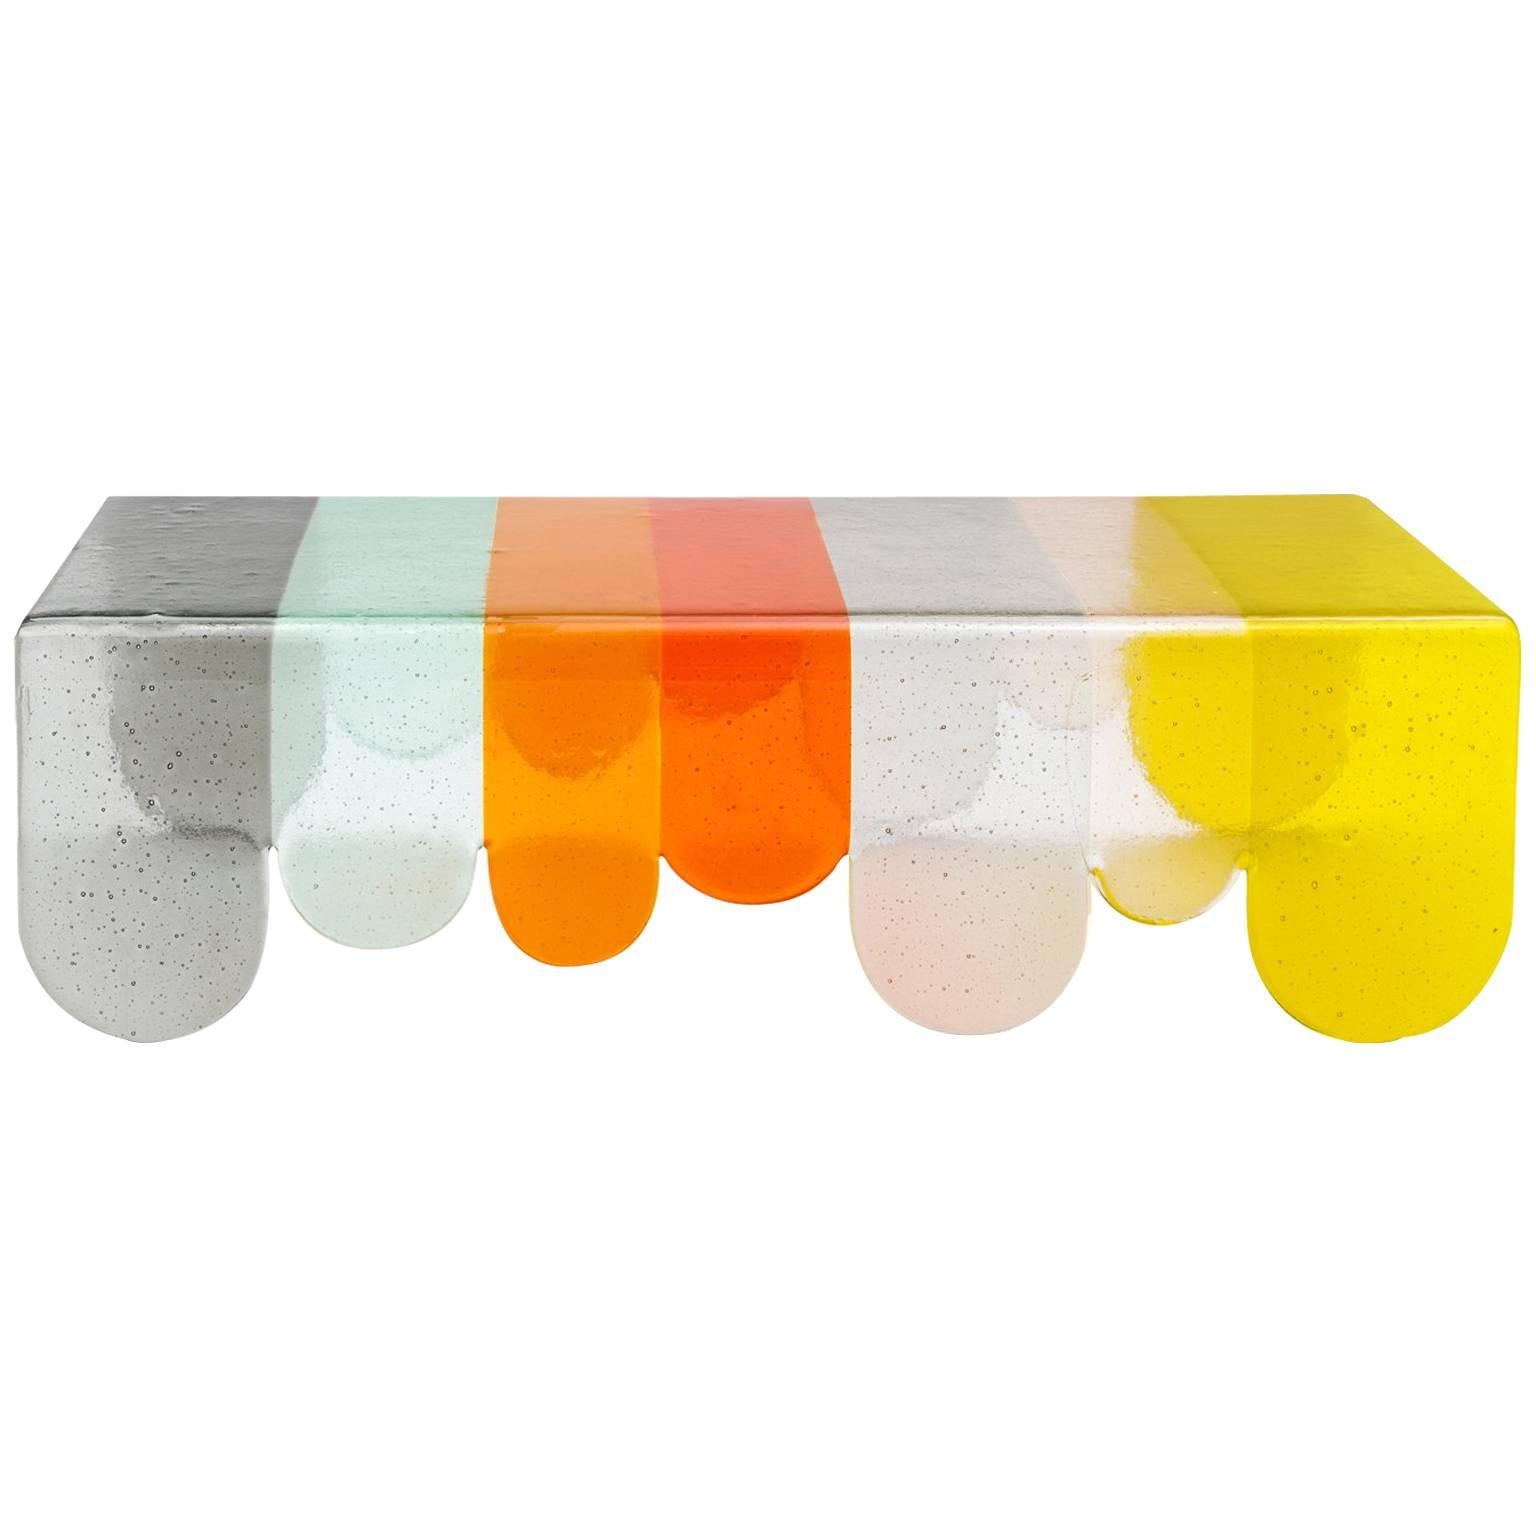 Lunapark Colored Murano Glass Coffee Table For Sale